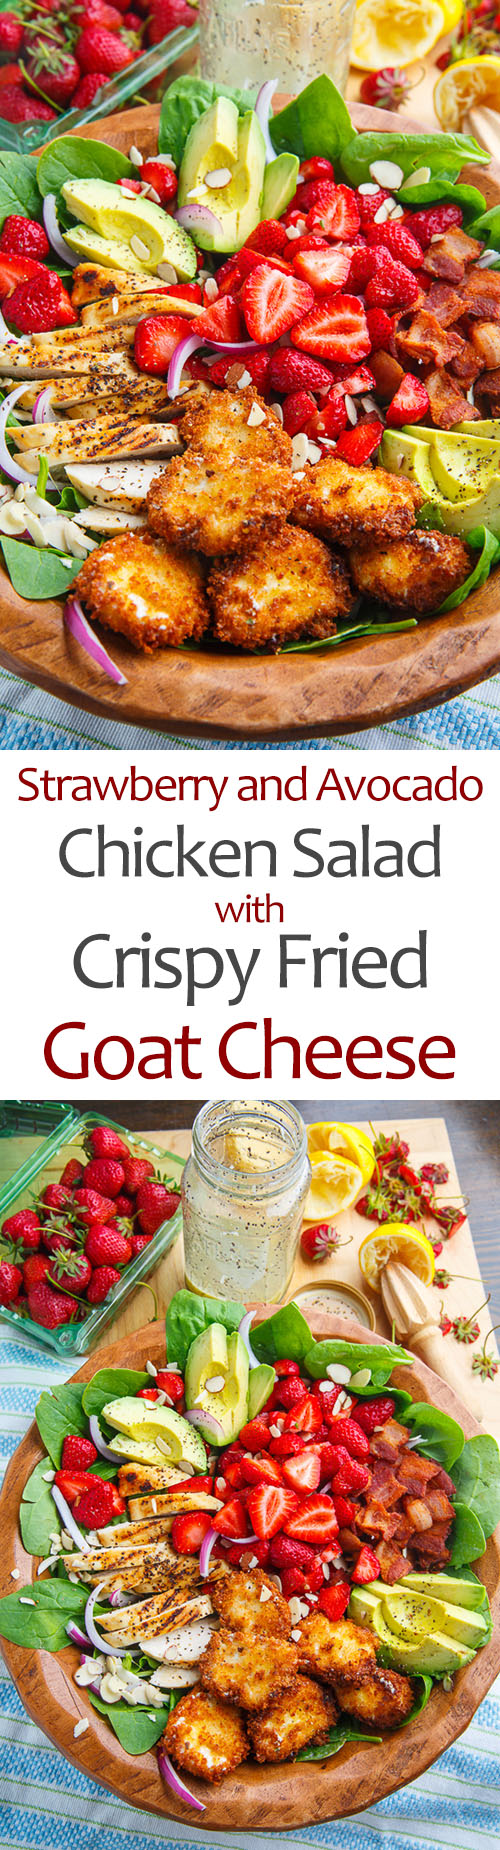 Strawberry and Avocado Chicken Salad with Crispy Fried Goat Cheese and Honey Lemon Dijon Poppy Seed Vinaigrette